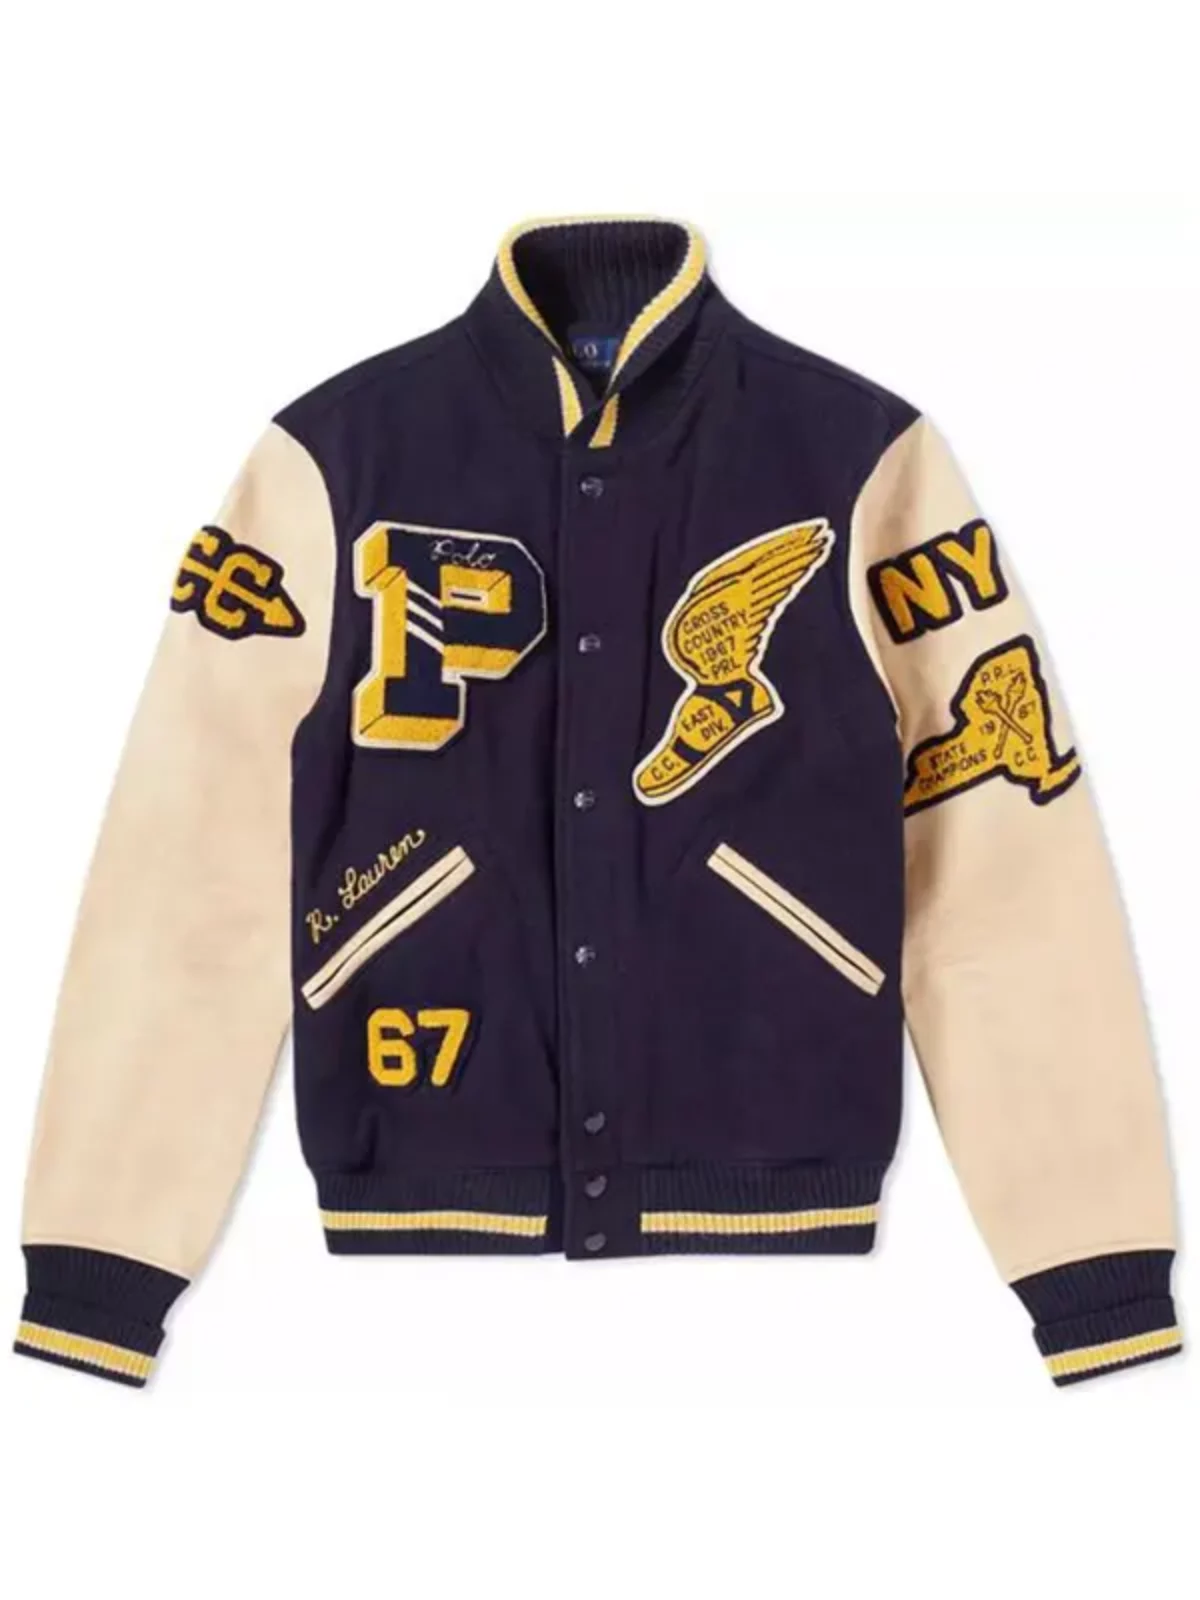 Toronto Blue Jays Letterman Varsity Jacket WOOL body & Faux